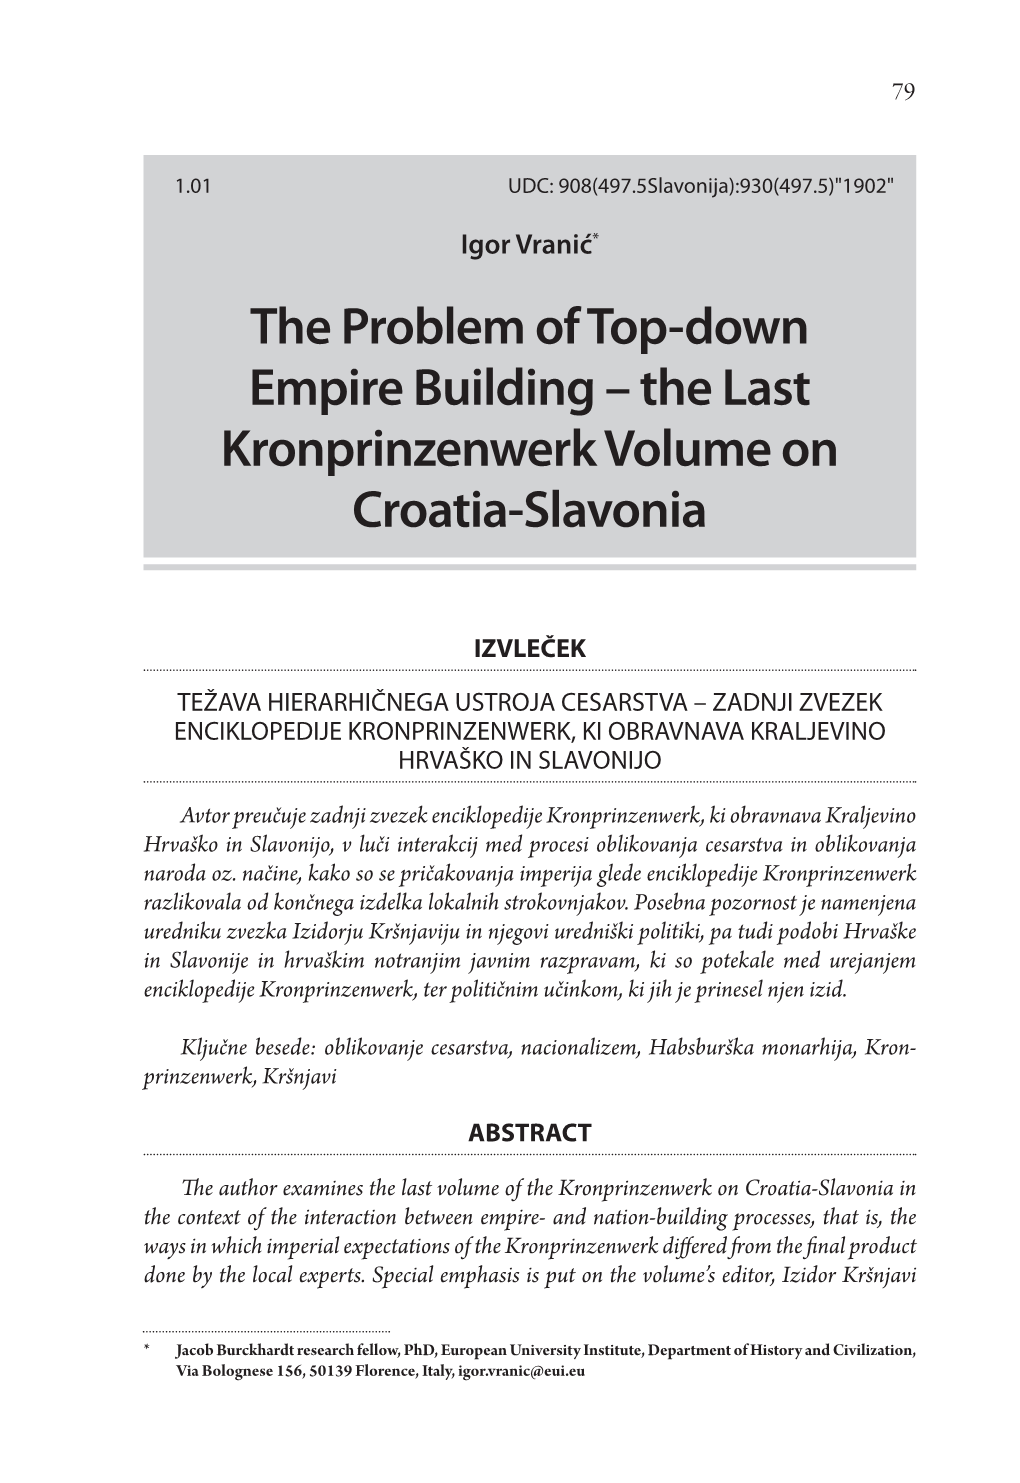 The Problem of Top-Down Empire Building – the Last Kronprinzenwerk Volume